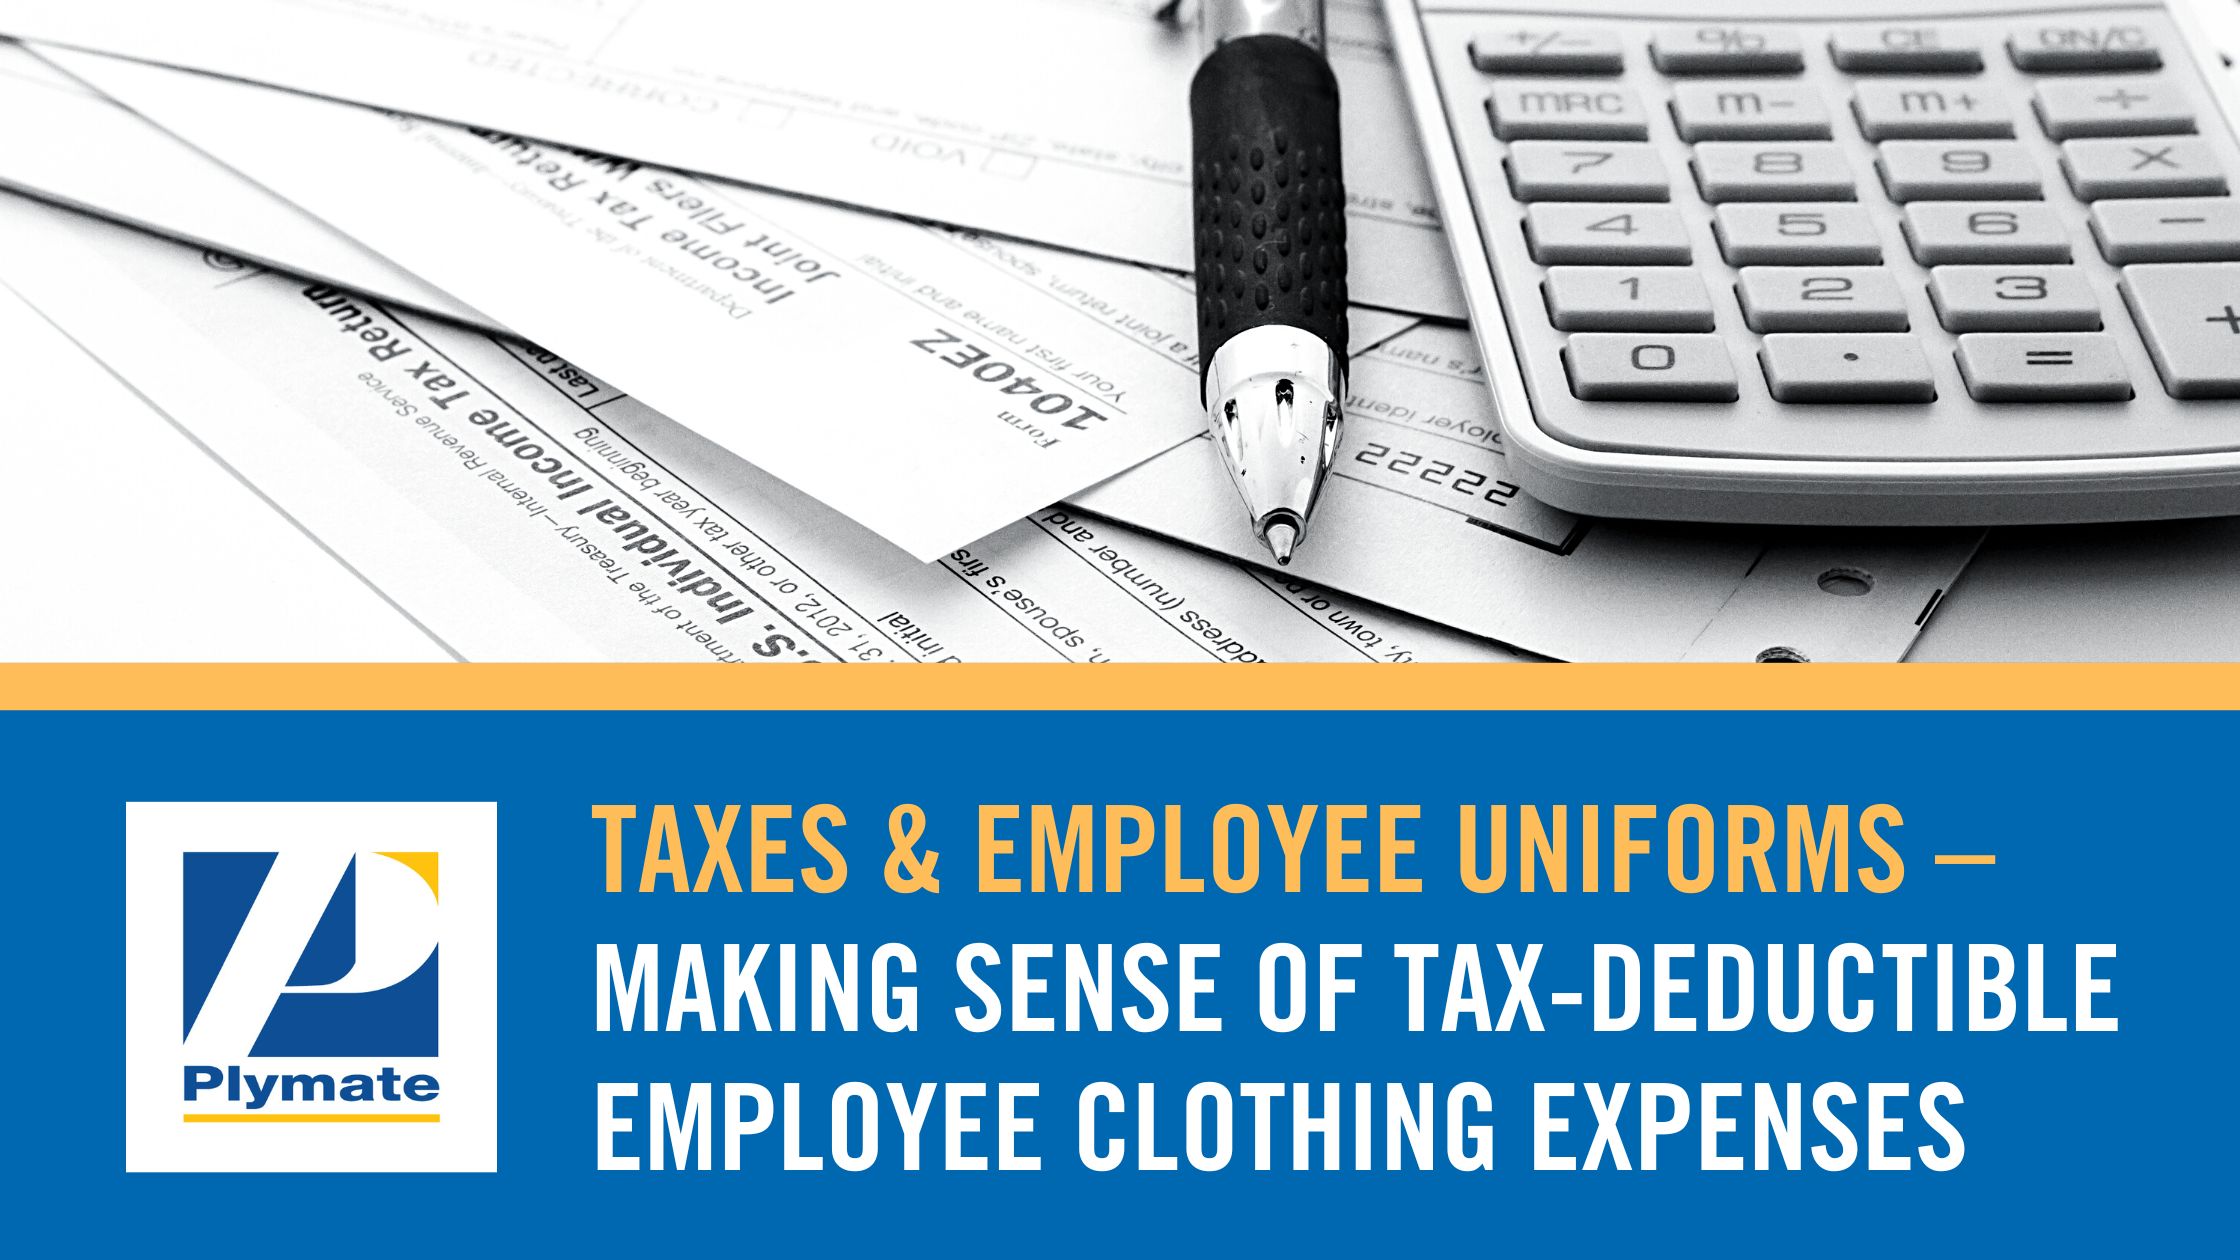 Make sense of tax-deductible employee clothing expenses